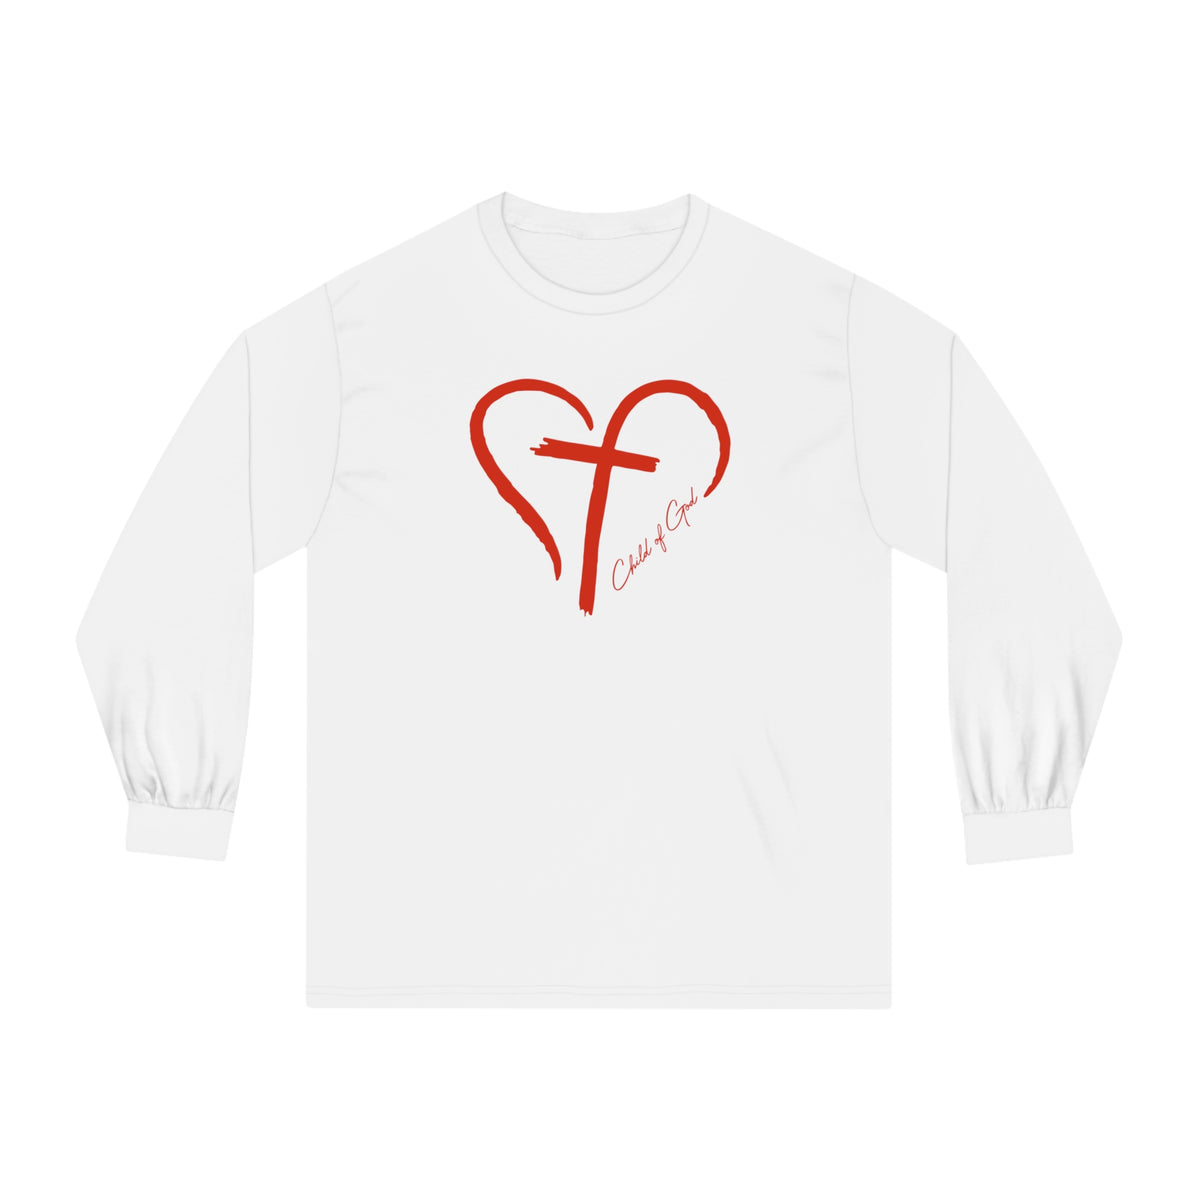 Heart and Cross Unisex Long Sleeve T-Shirt